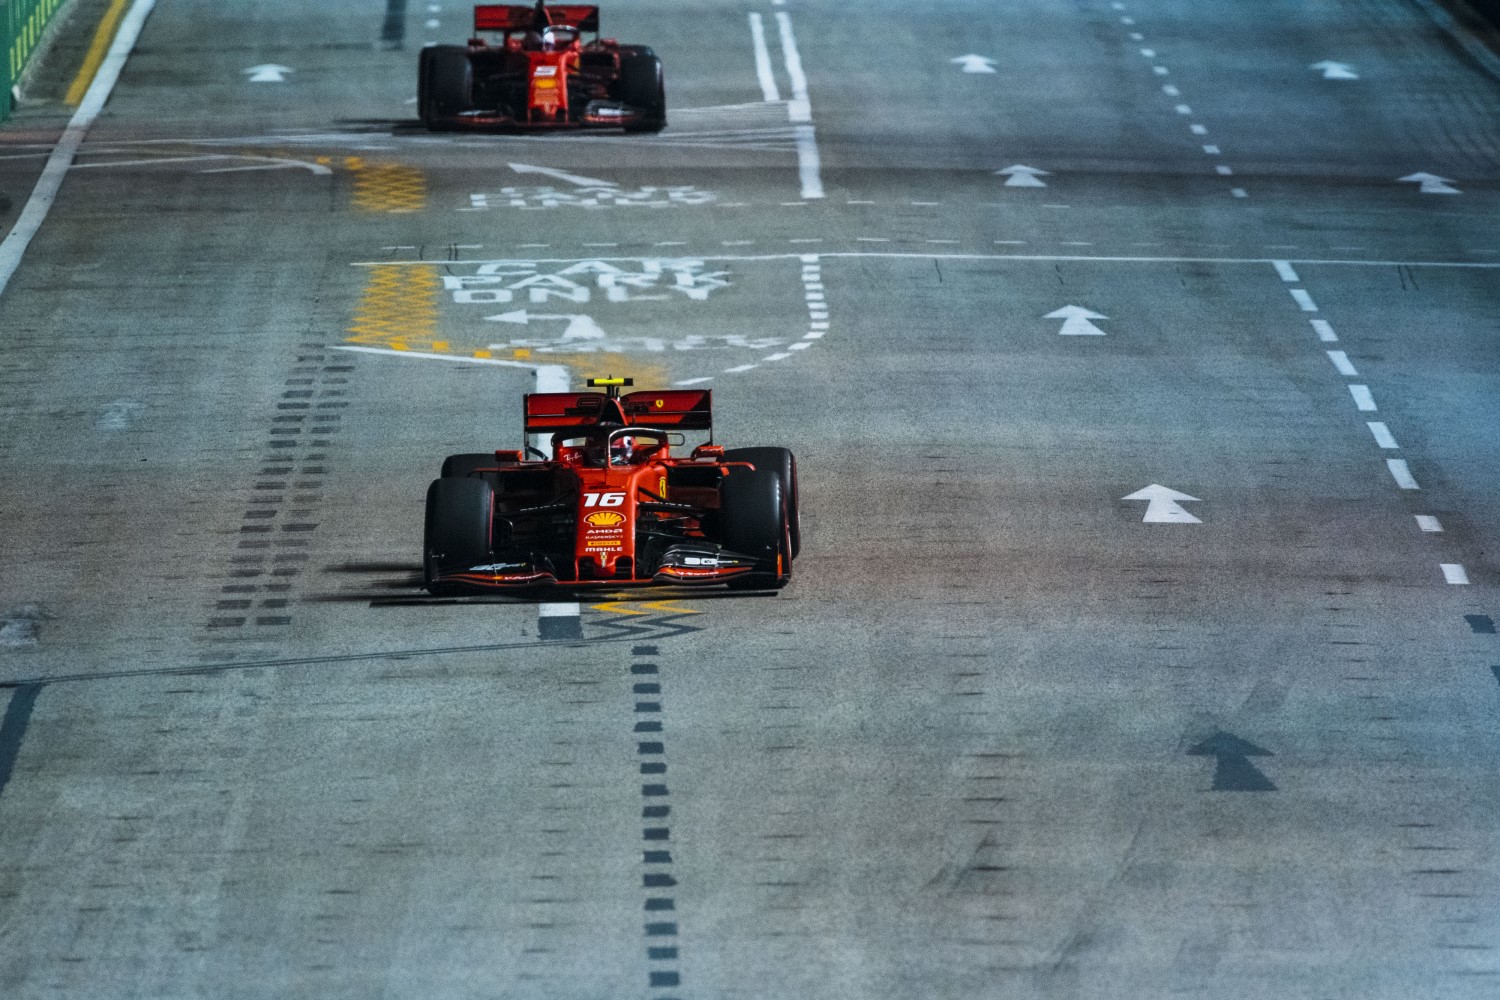 The Ferraris of Leclerc and Vettel